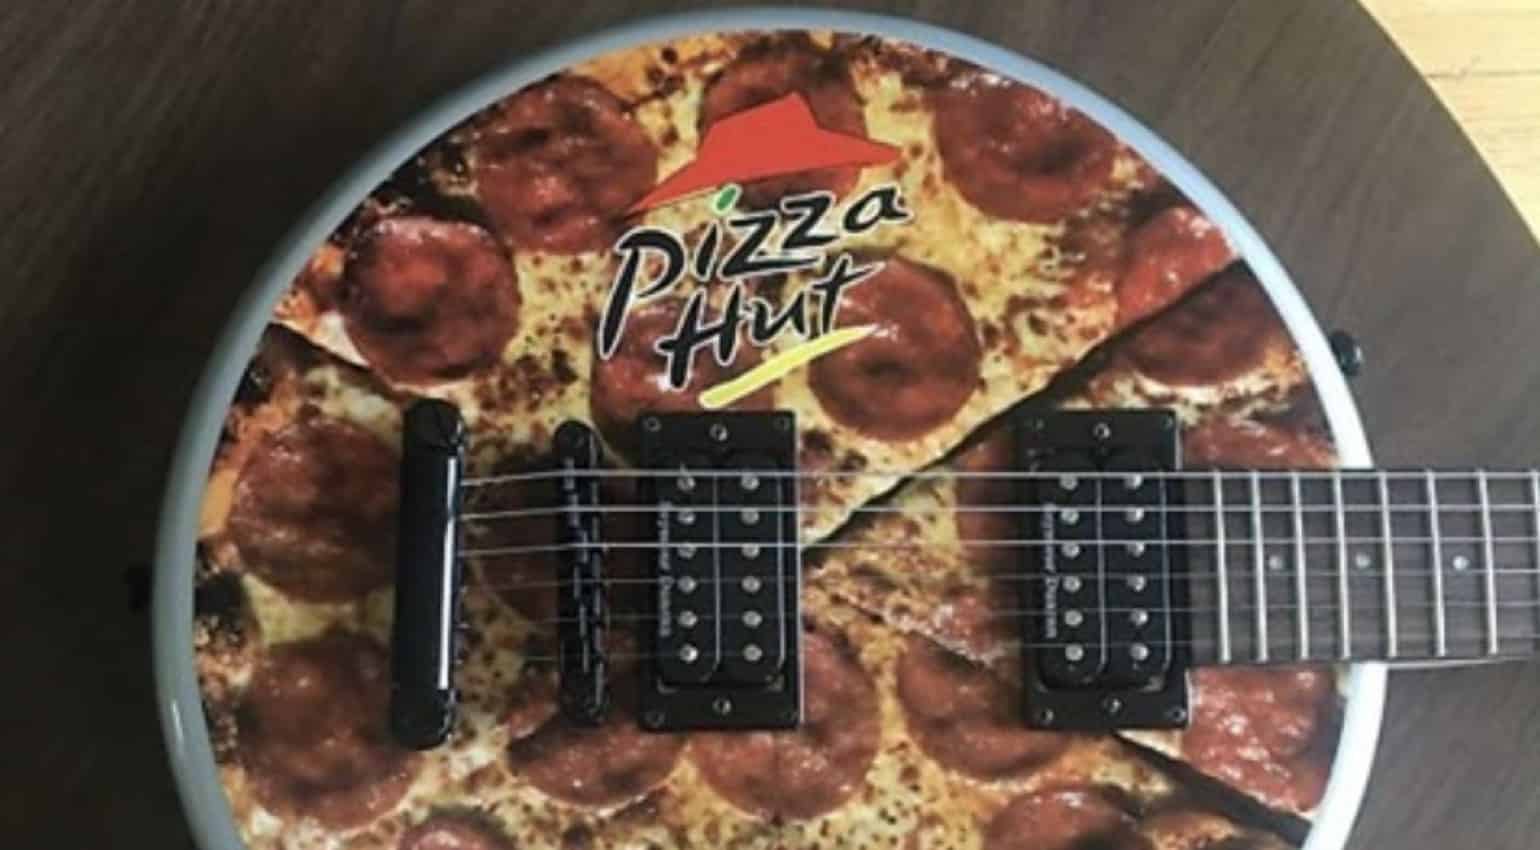 Pizza Hut Guitar promotional item